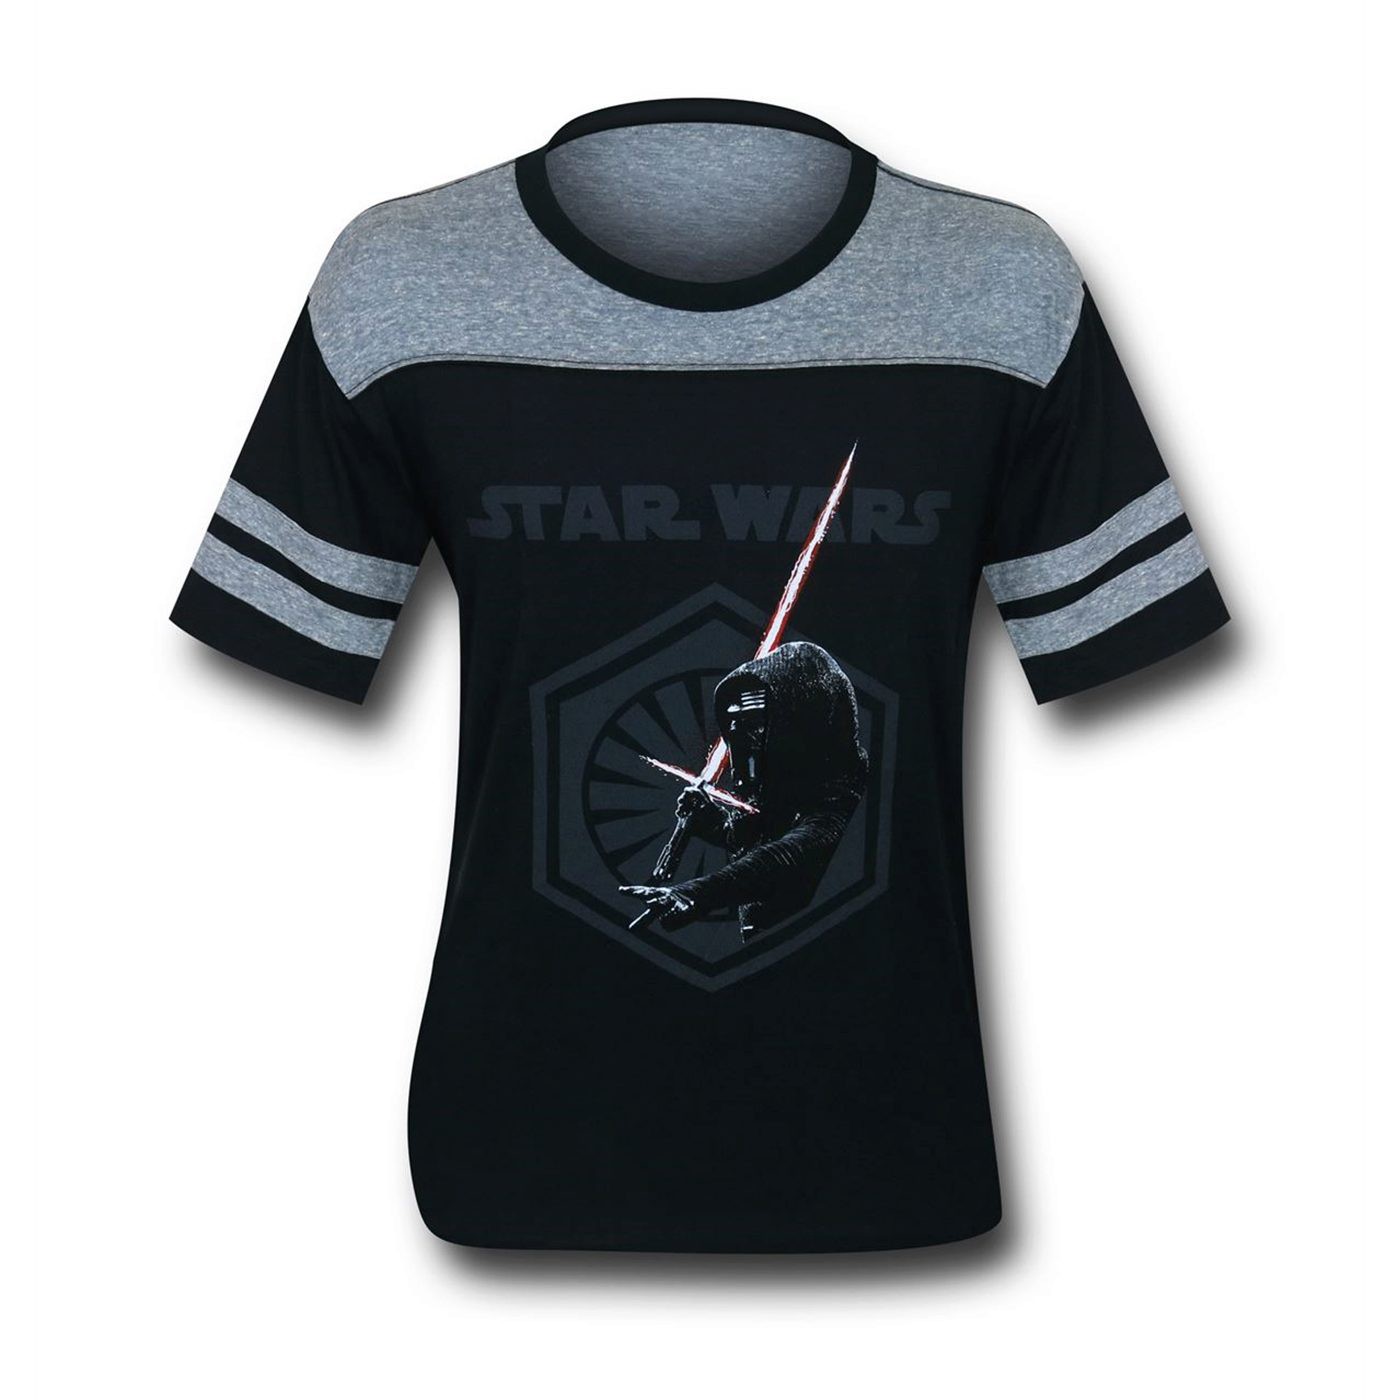 Star Wars New Order Athletic Men's T-Shirt